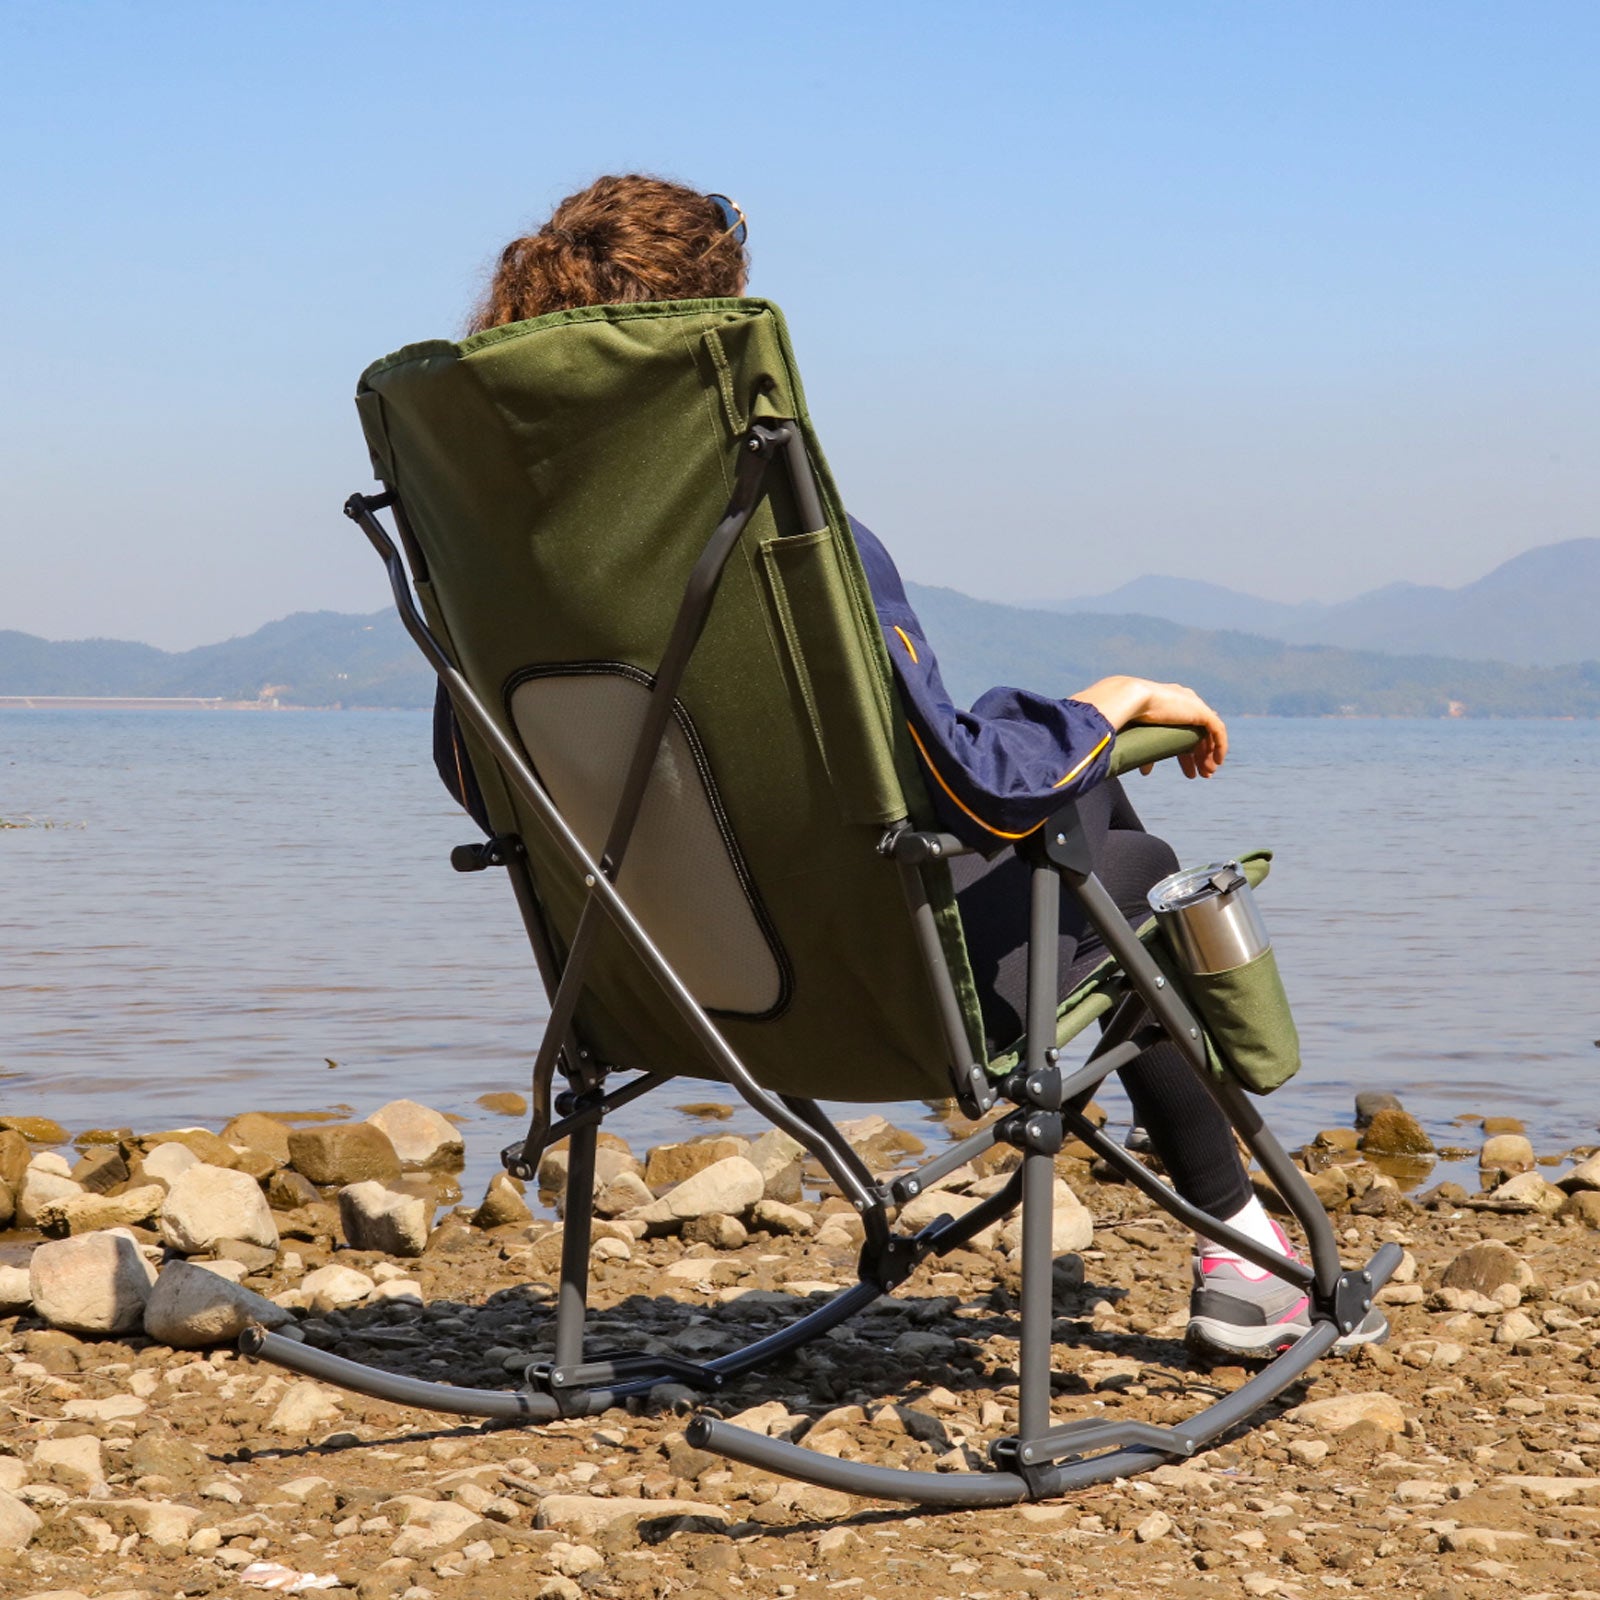 Outdoor Portable Folding Rocking Chair Lounge Chair Beach